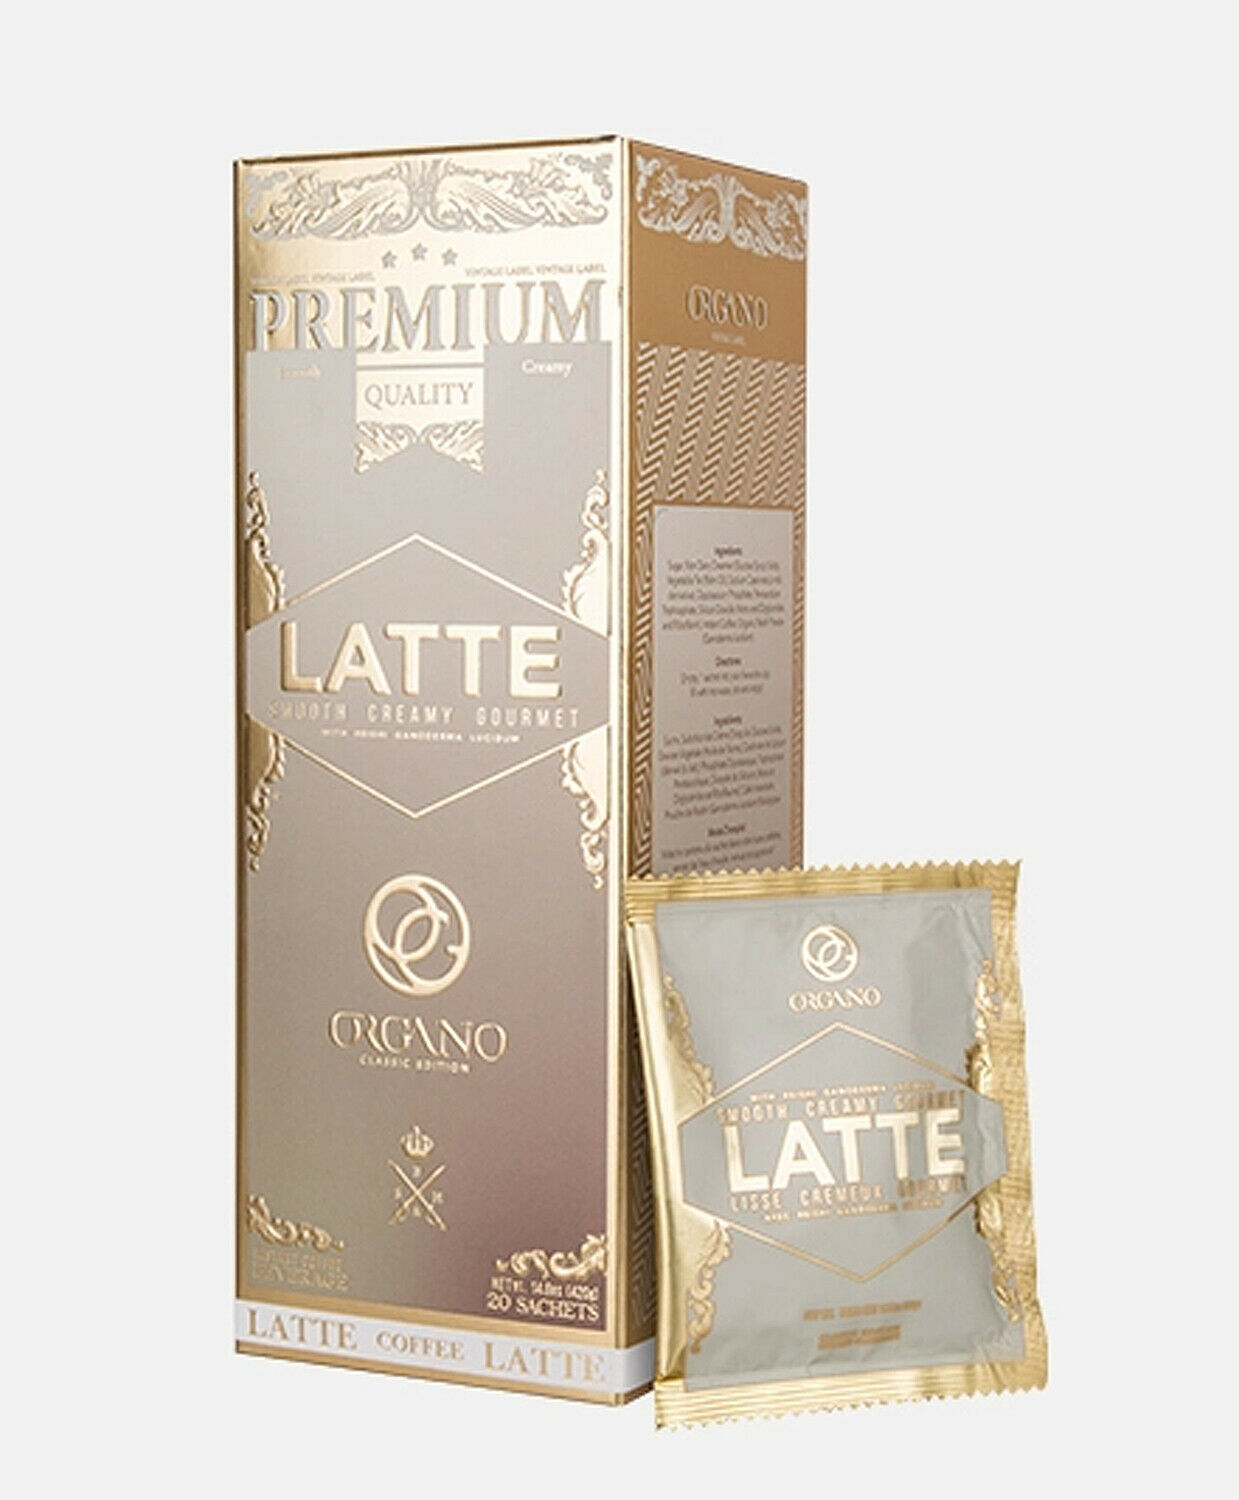 Organo Gold Cafe Latte Gourmet Coffee, 20 Sachets